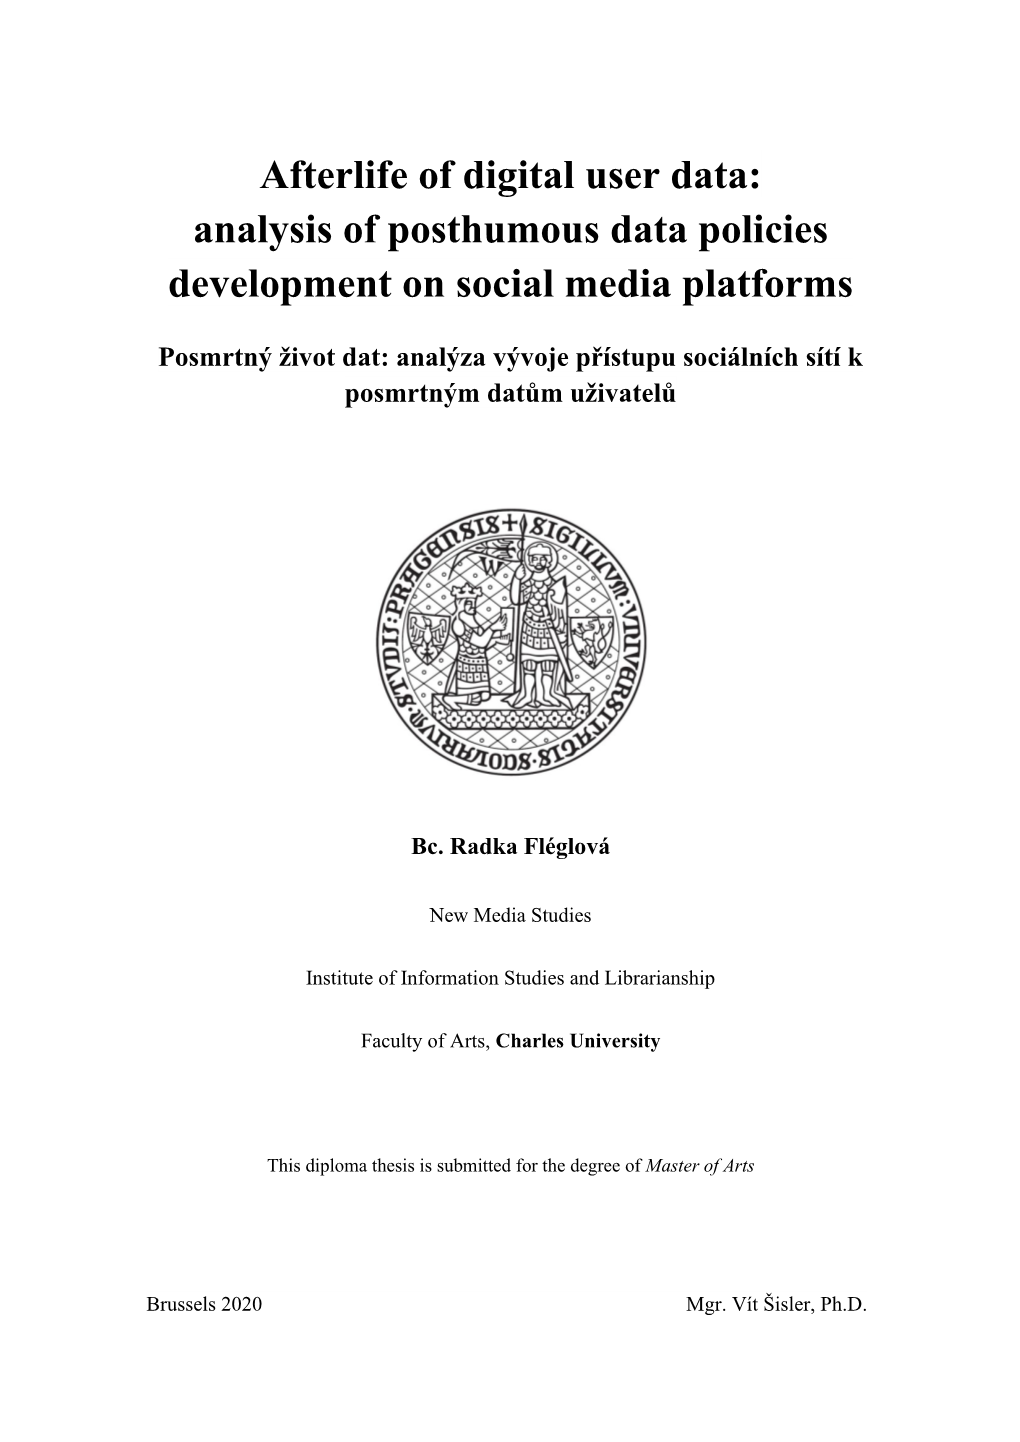 Afterlife of Digital User Data: Analysis of Posthumous Data Policies Development on Social Media Platforms